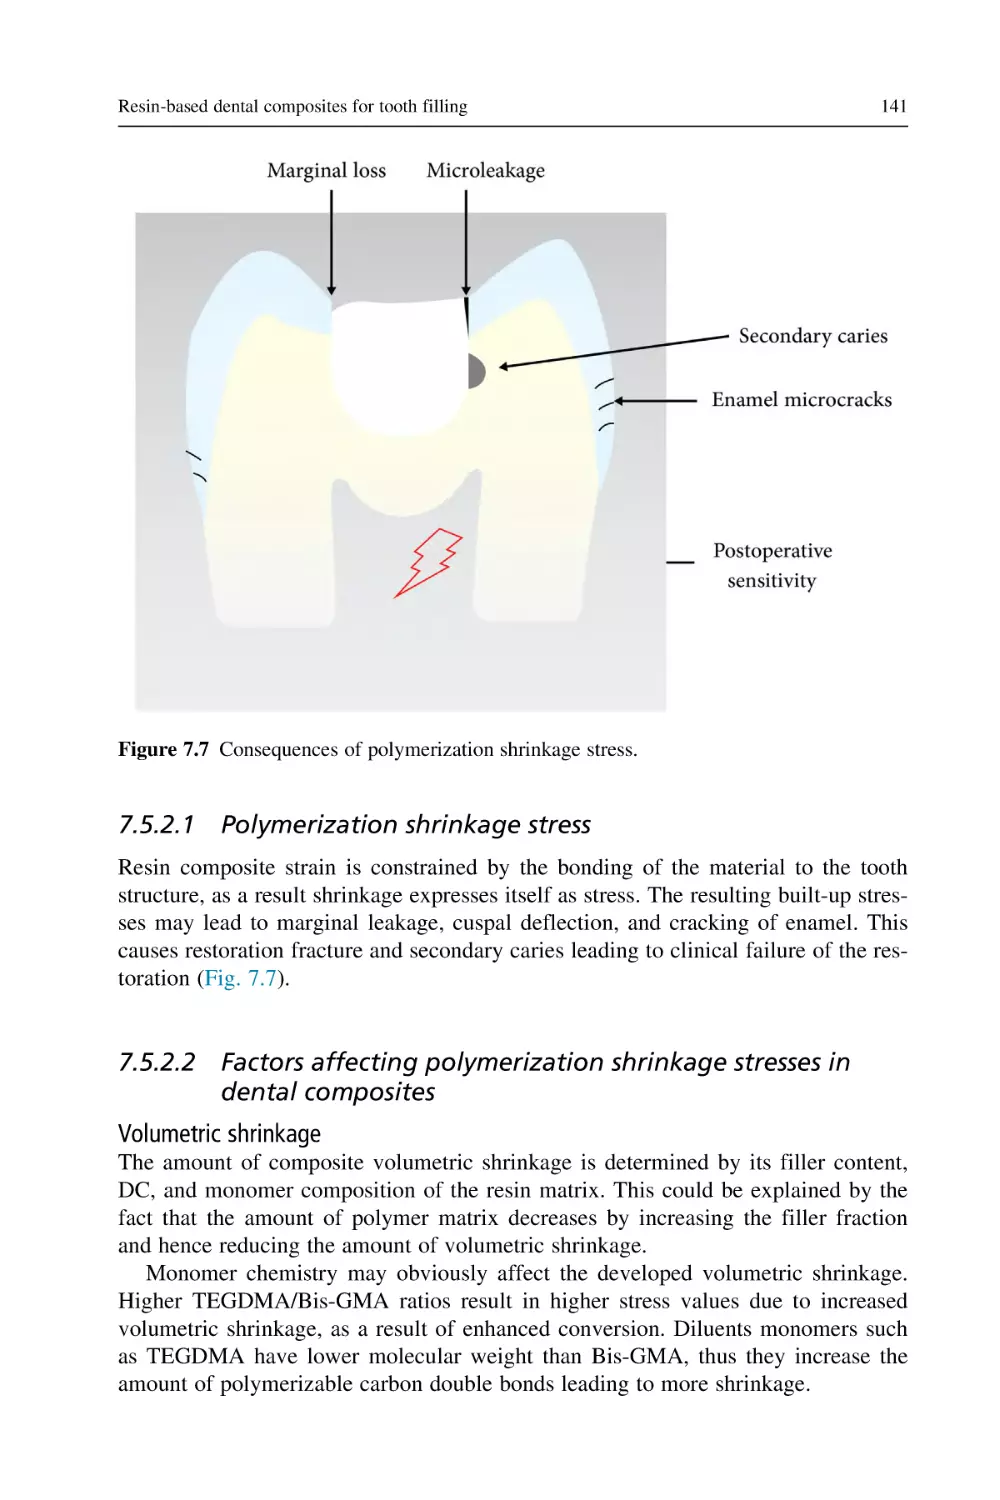 7.5.2.1 Polymerization shrinkage stress
7.5.2.2 Factors affecting polymerization shrinkage stresses in dental composites
Volumetric shrinkage